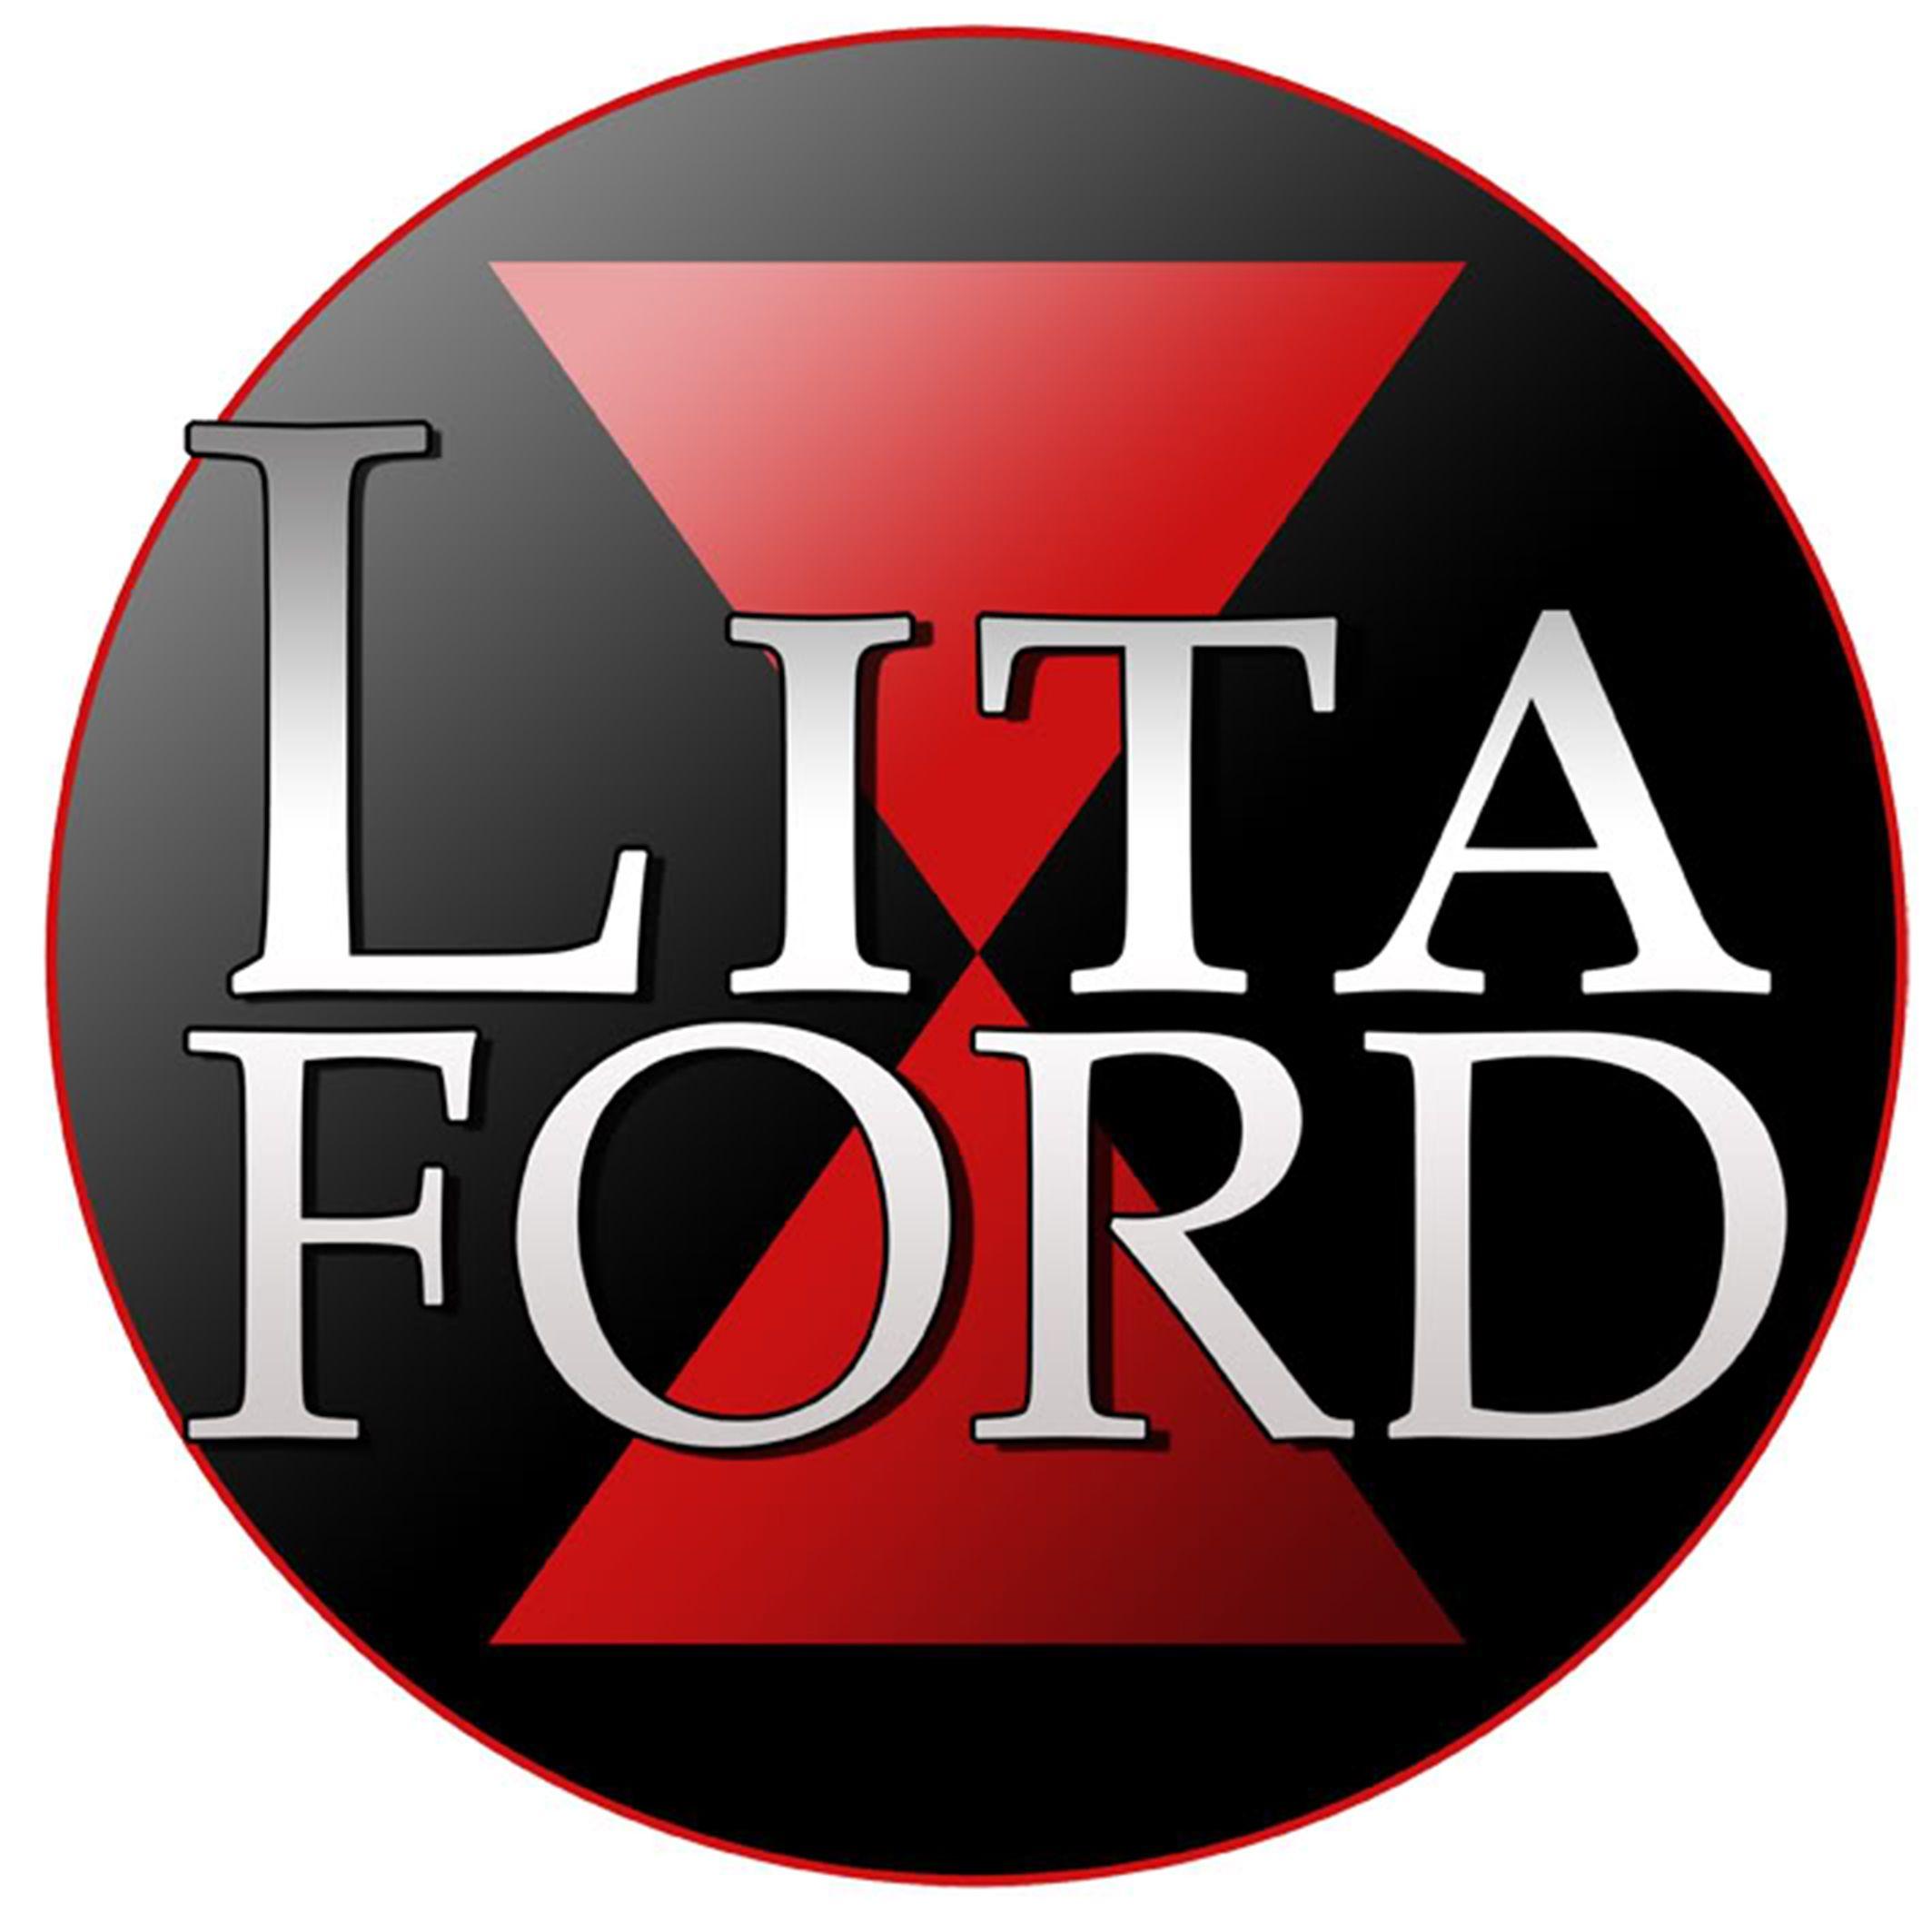 Lita Logo - lita-ford-logo - Paradise Artists